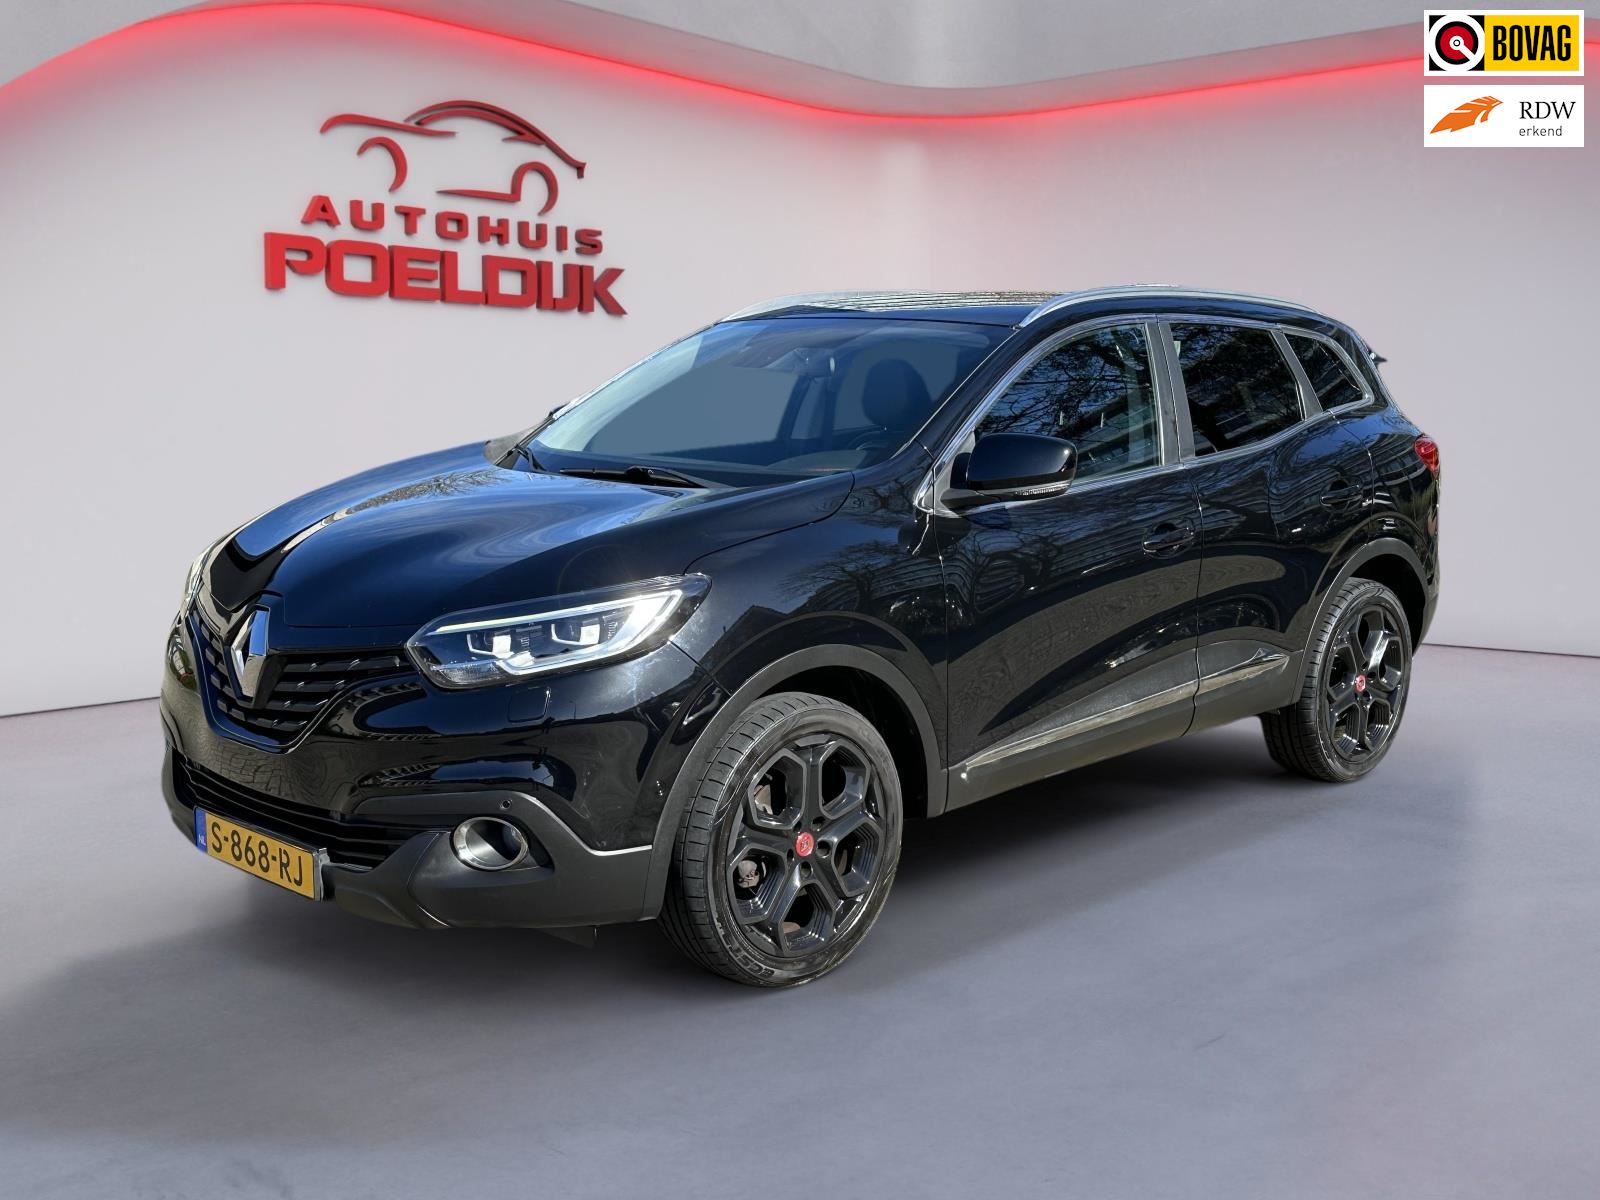 Renault Kadjar occasion - Autohuis Poeldijk